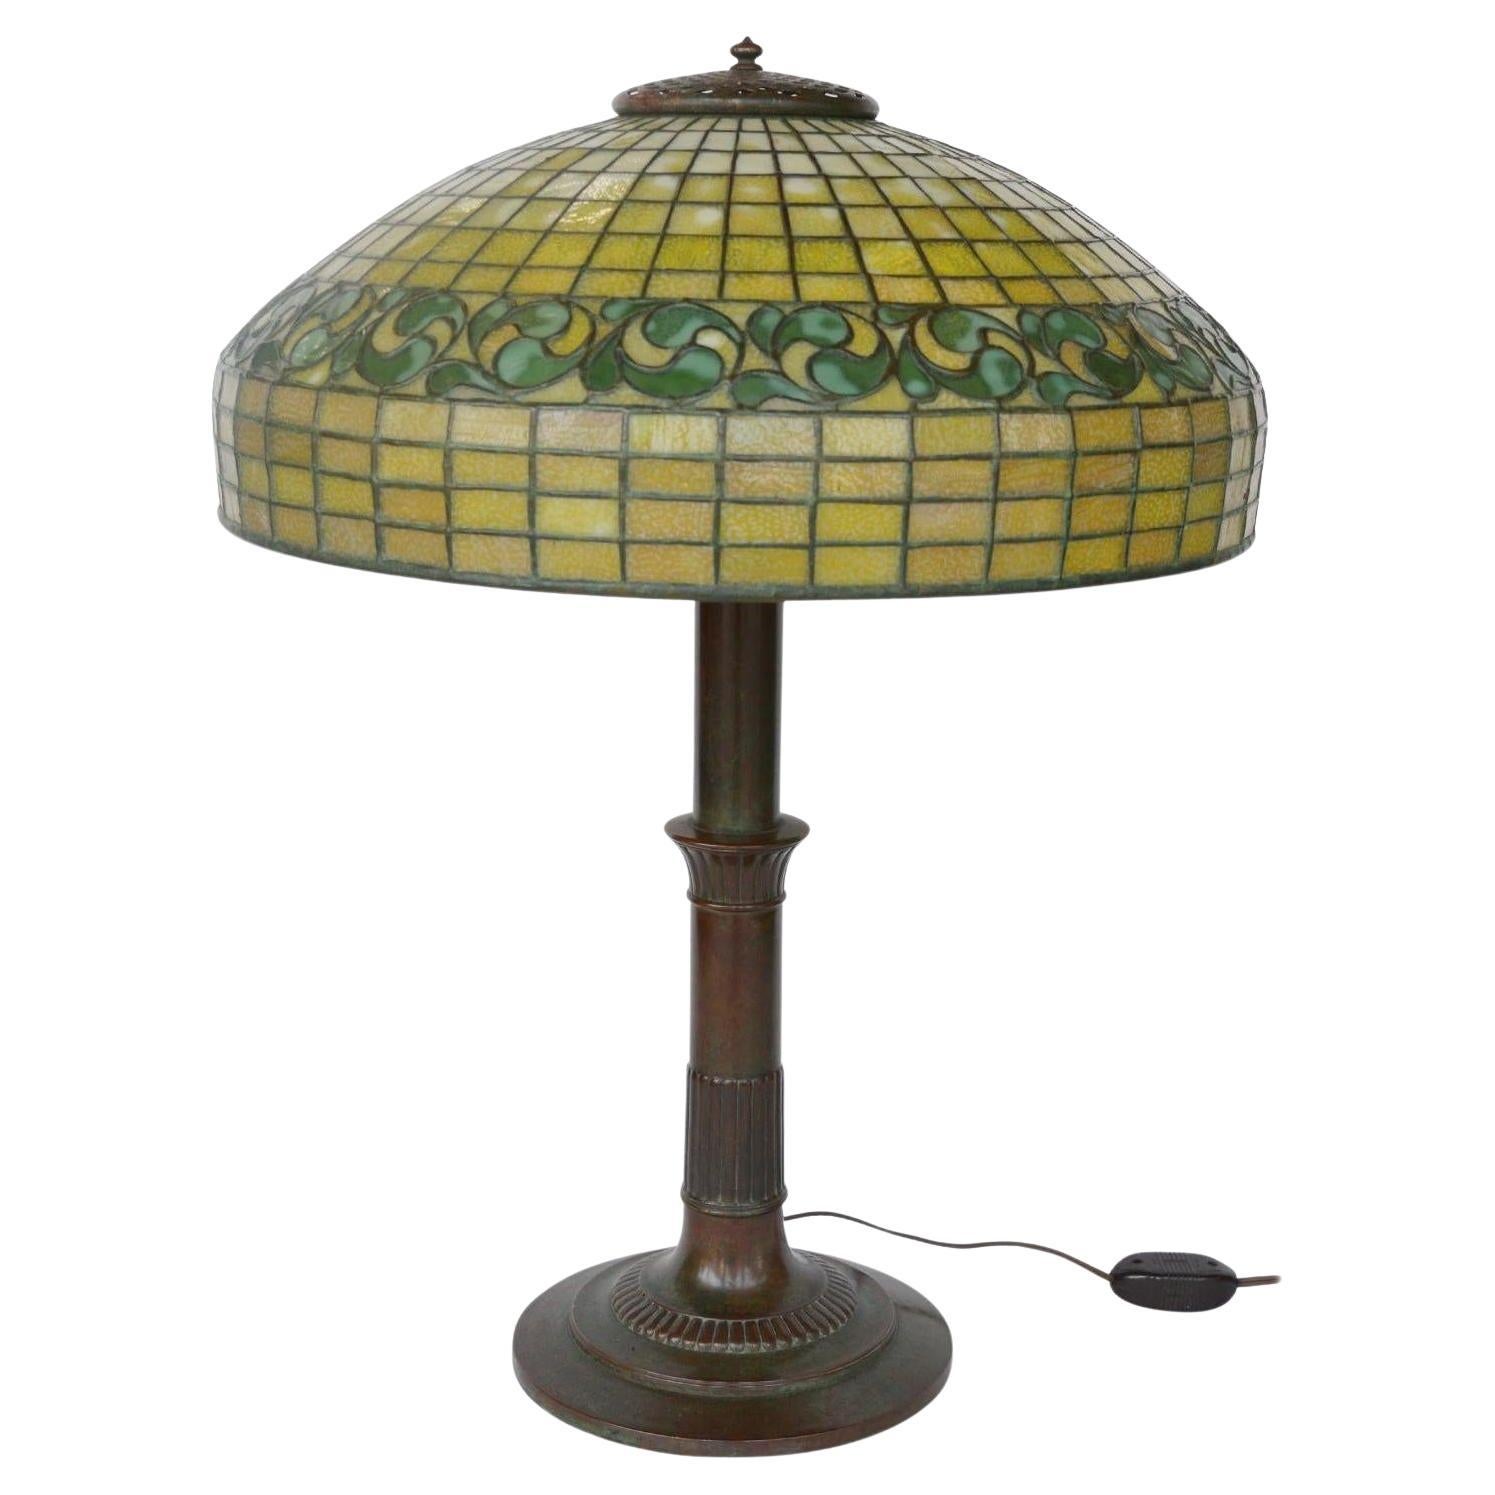 Tiffany Studios Lemon leaf table lamp.